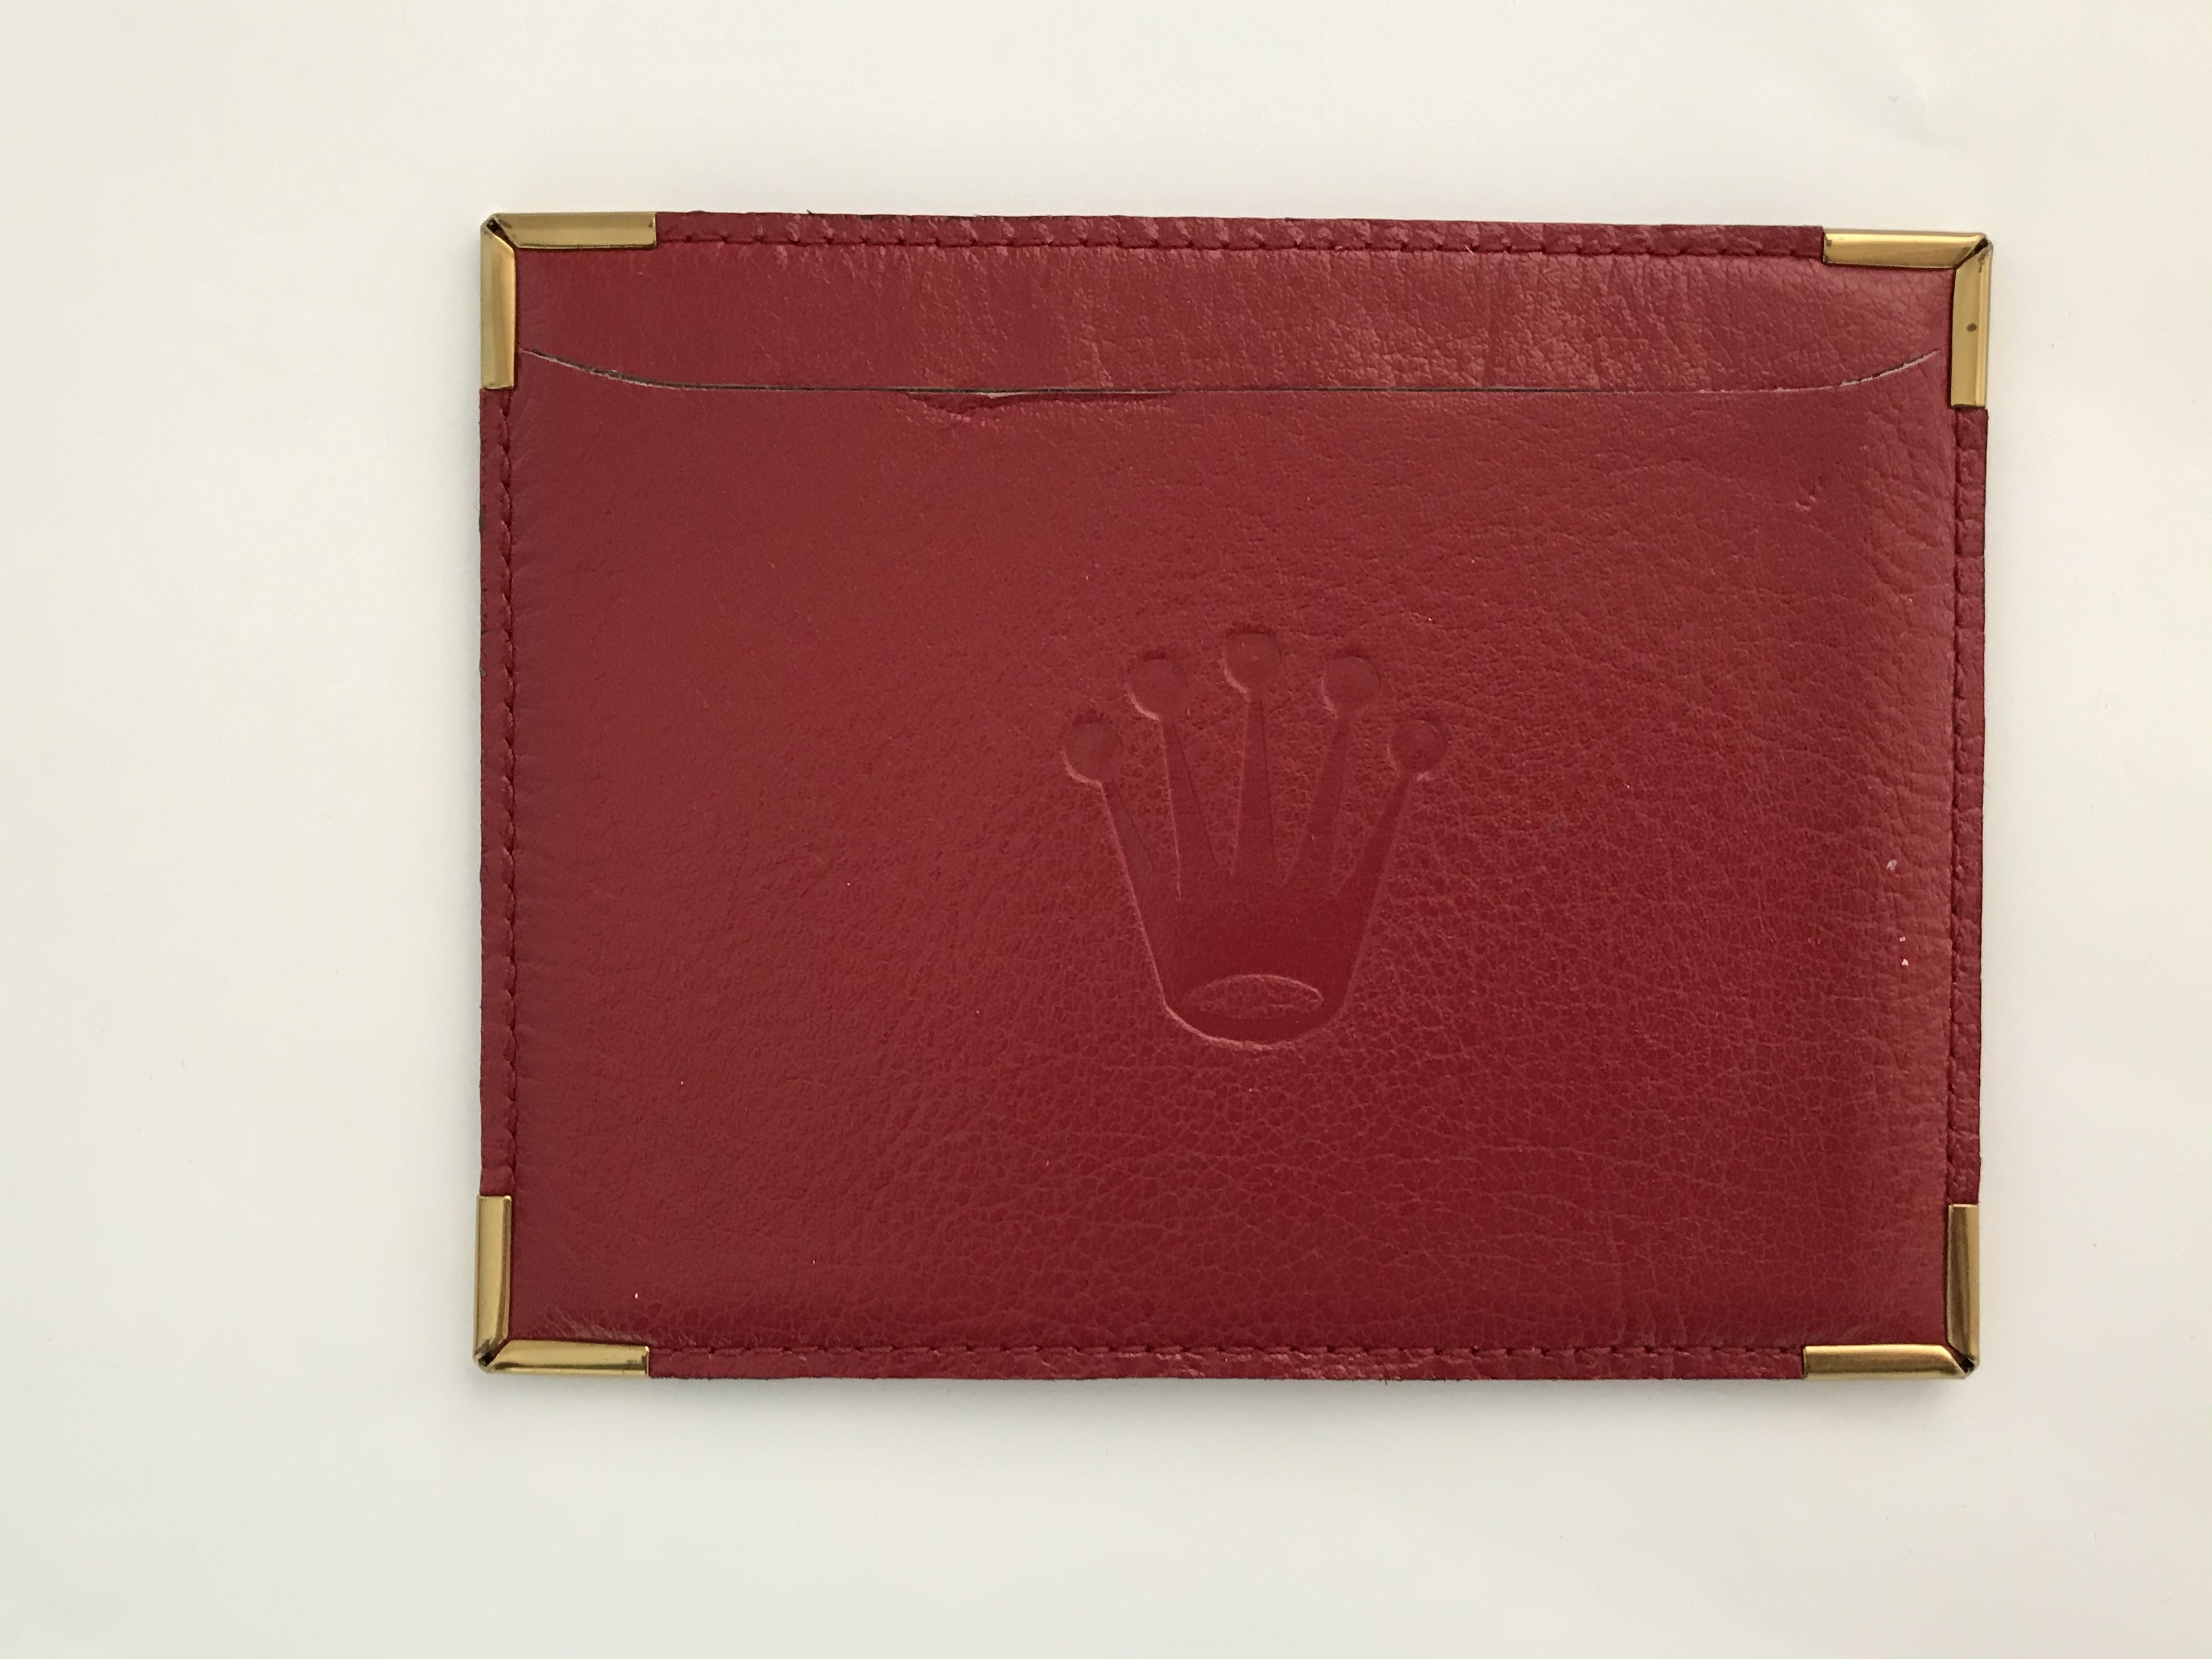 Vintage Rolex leather red card holder - Rolex